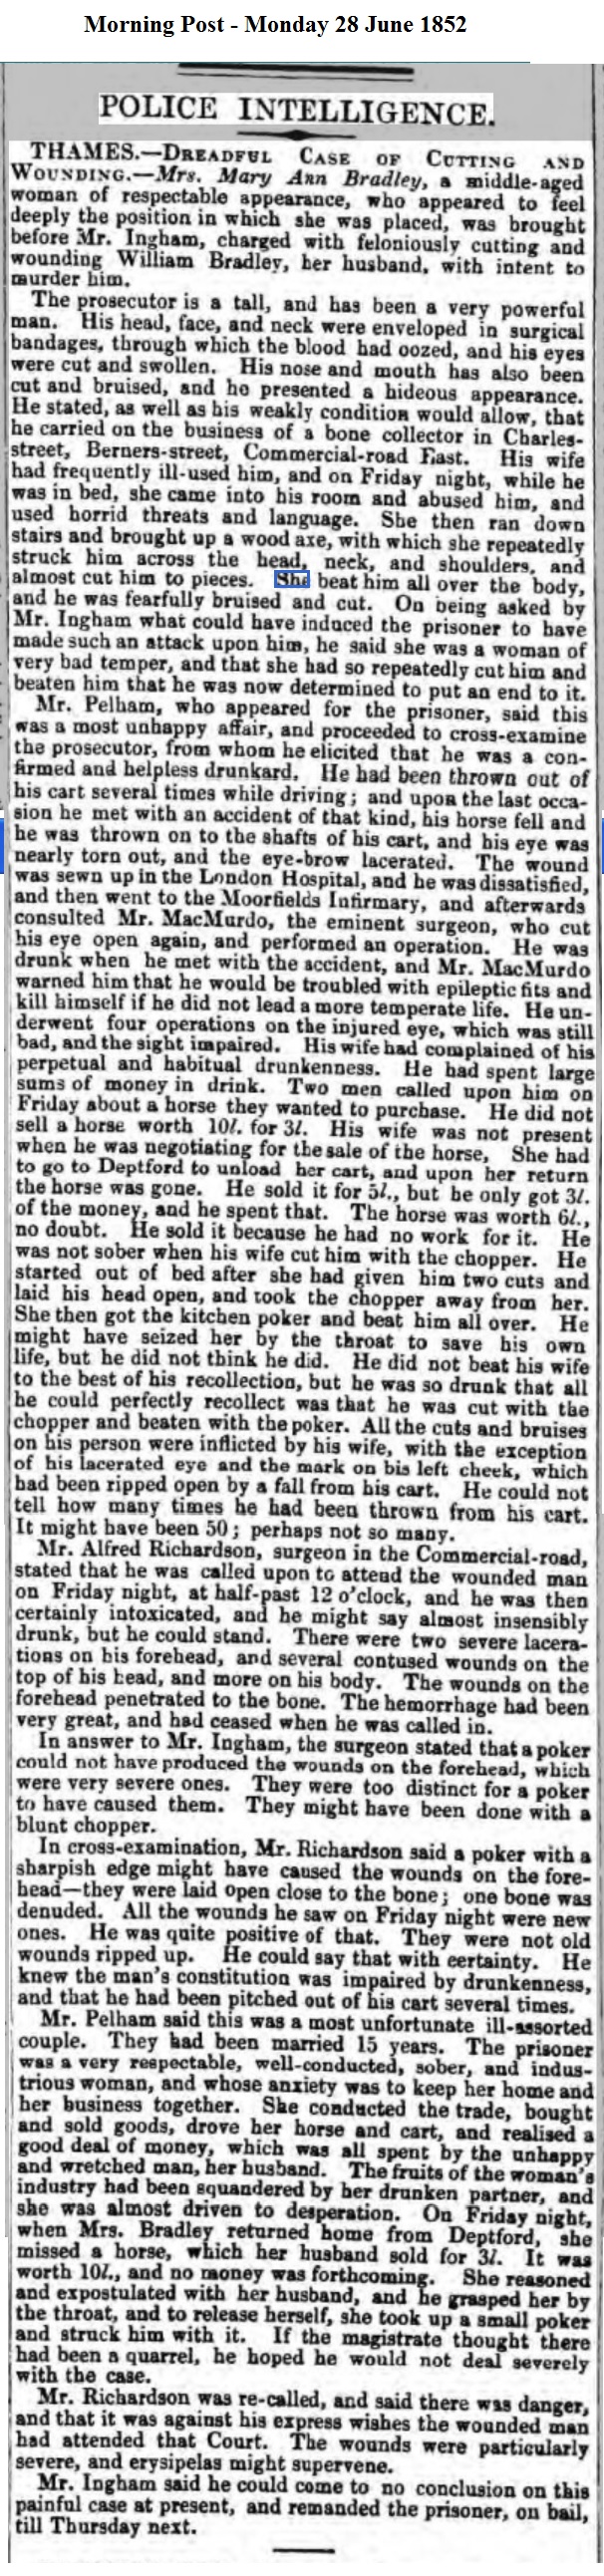 1852 Morning Post - Monday 28 June 1852